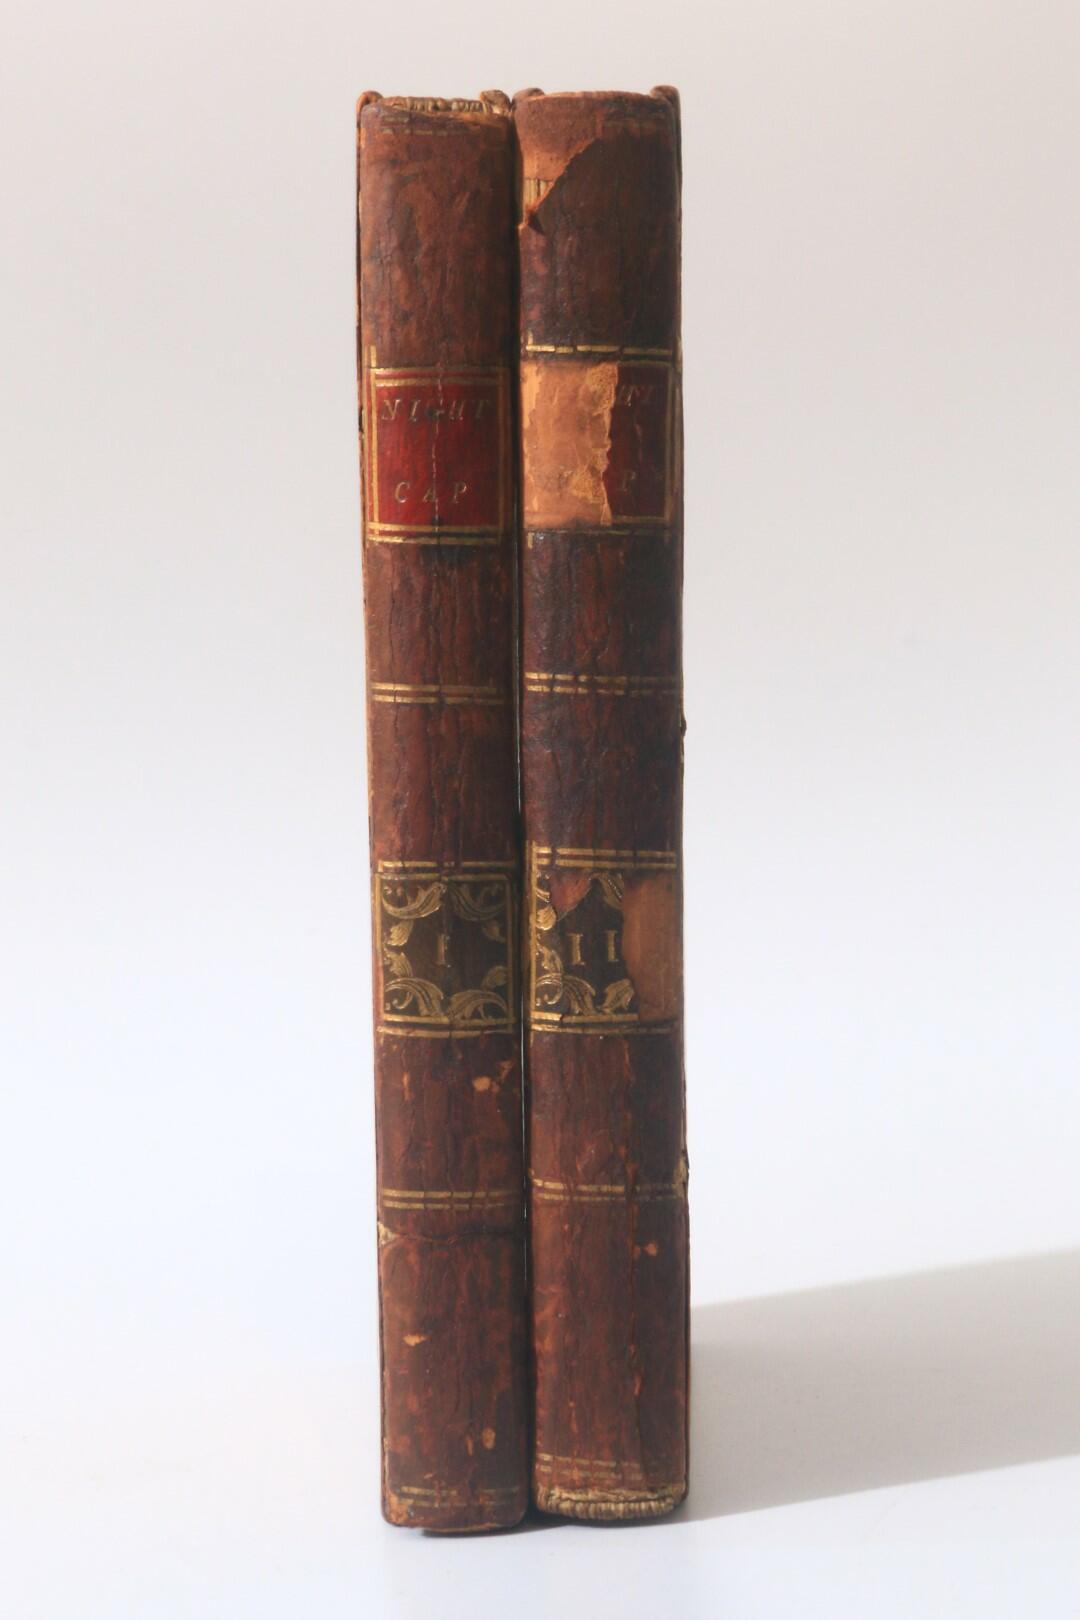 Mr [Louis Sebastian] Mercier - The Nightcap - Wilson, White, Cash, Moore and Jones, 1786, First Edition.